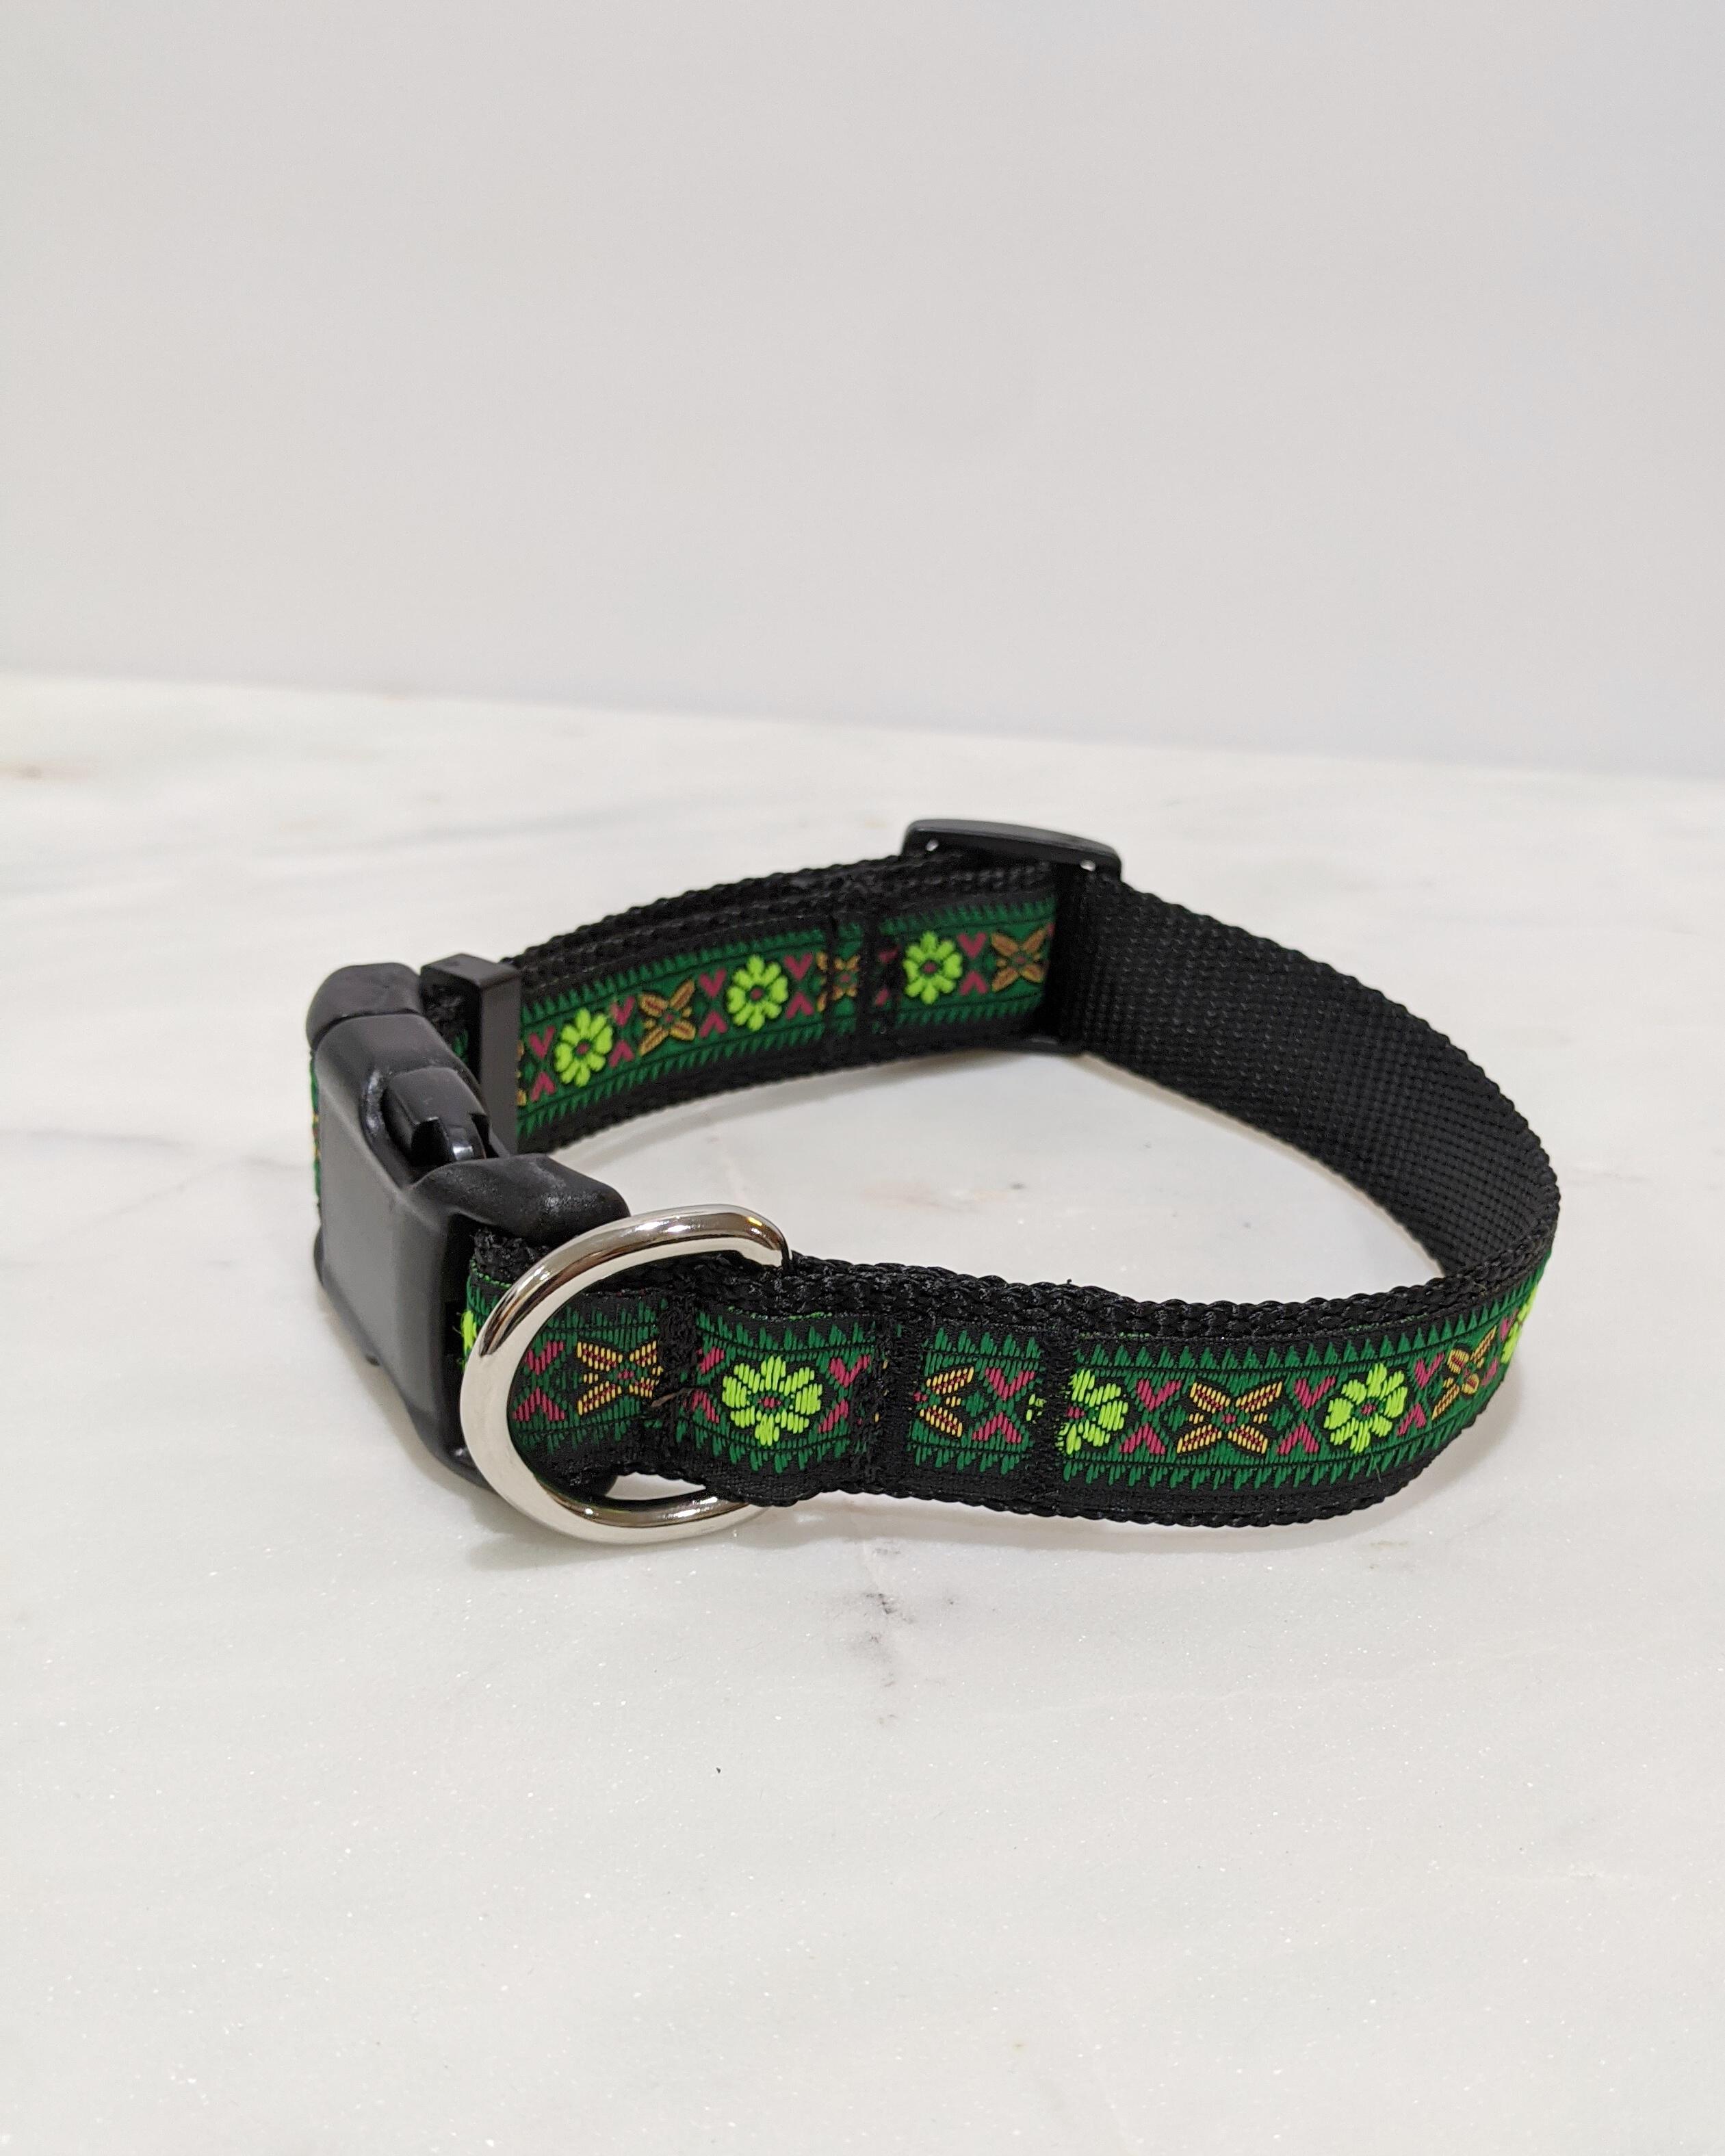 1 inch dog collar in sizes medium or large